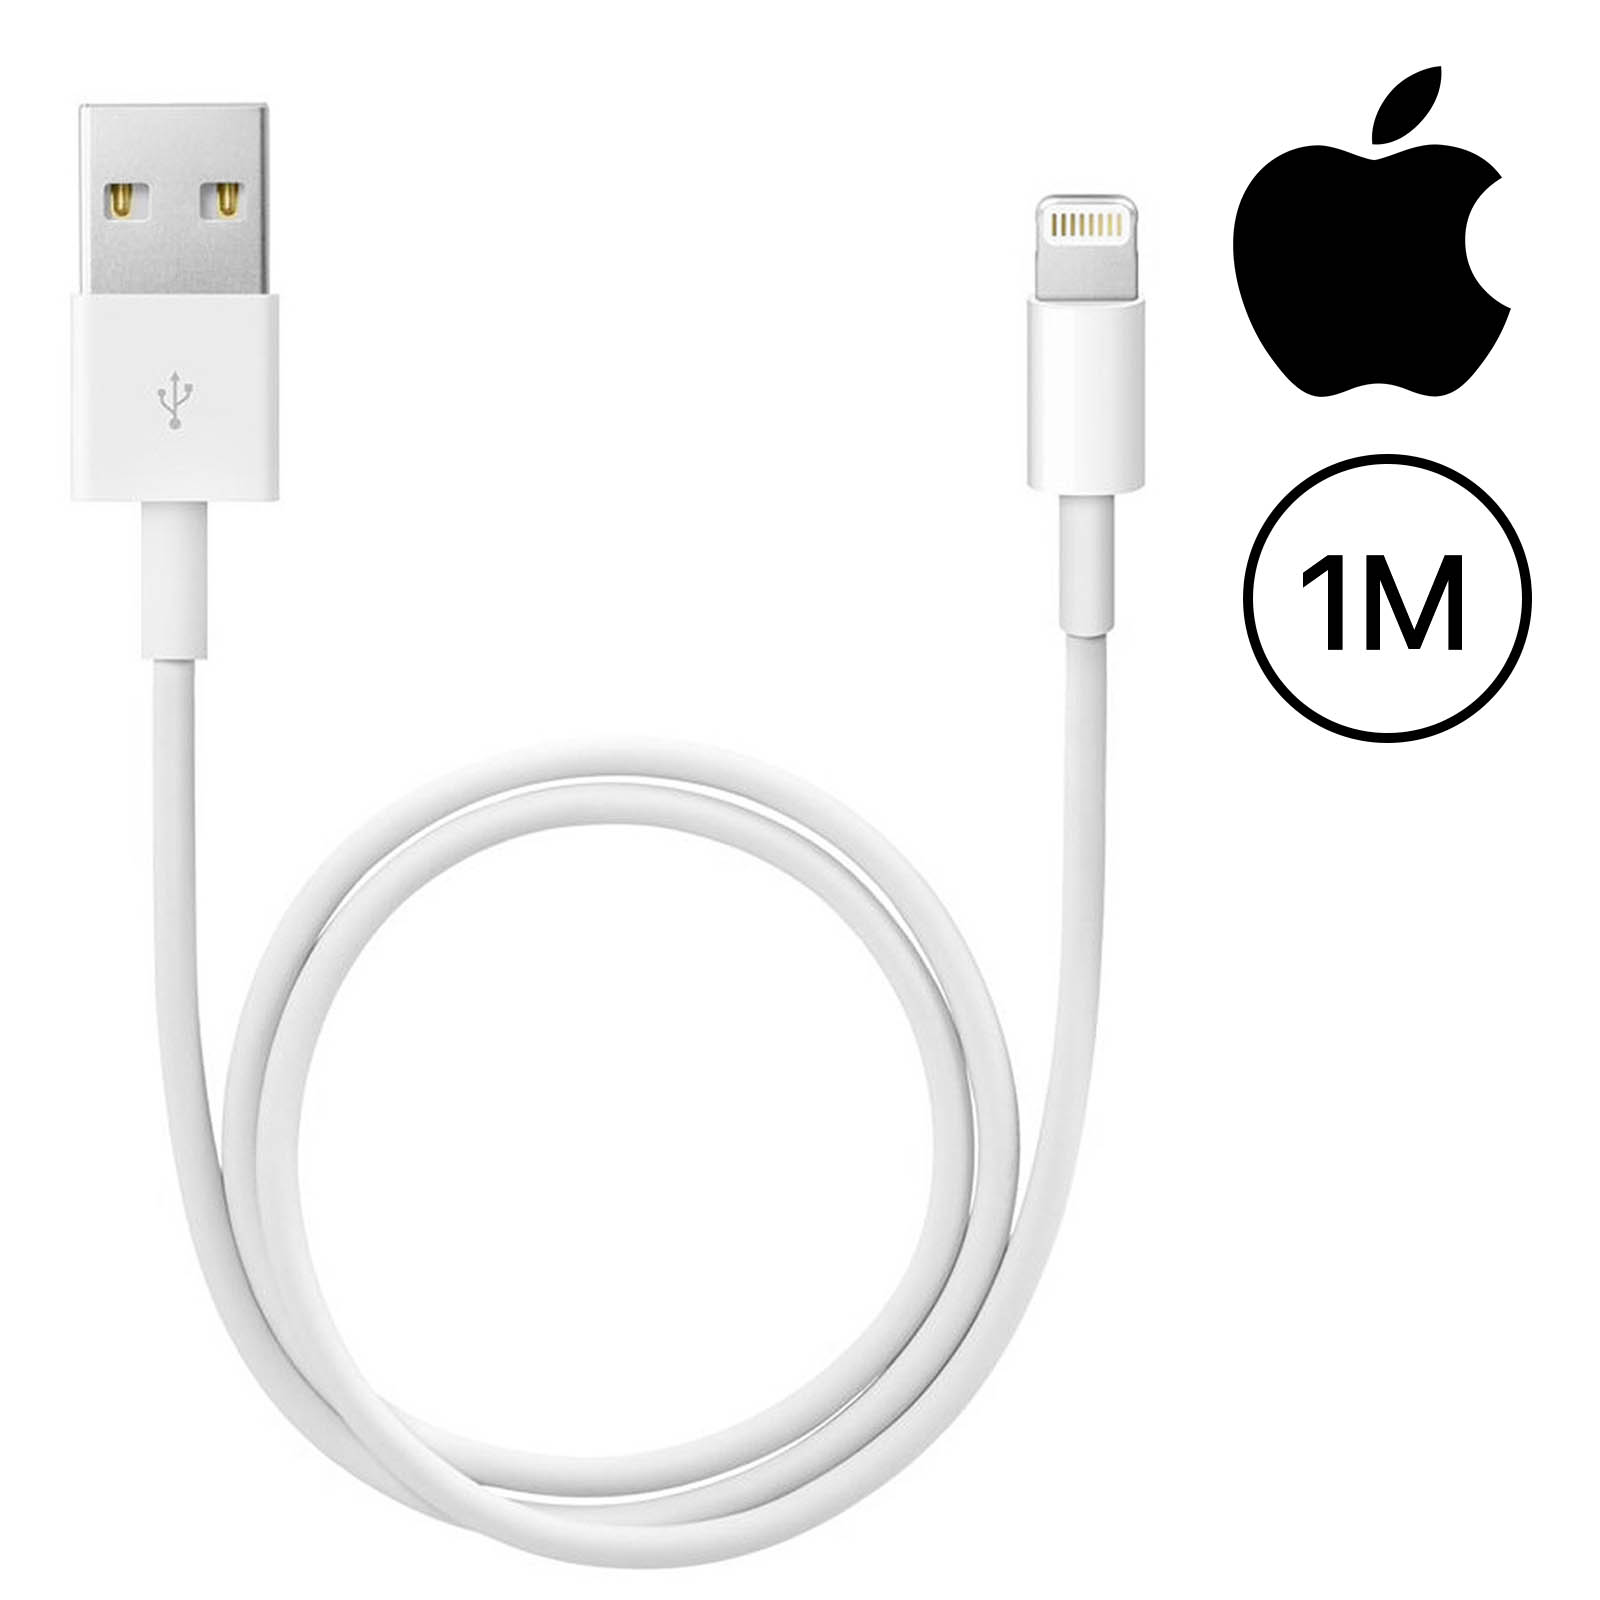 Acquista i cavi USB per Apple iPhone 14 Pro Max su Gsm55